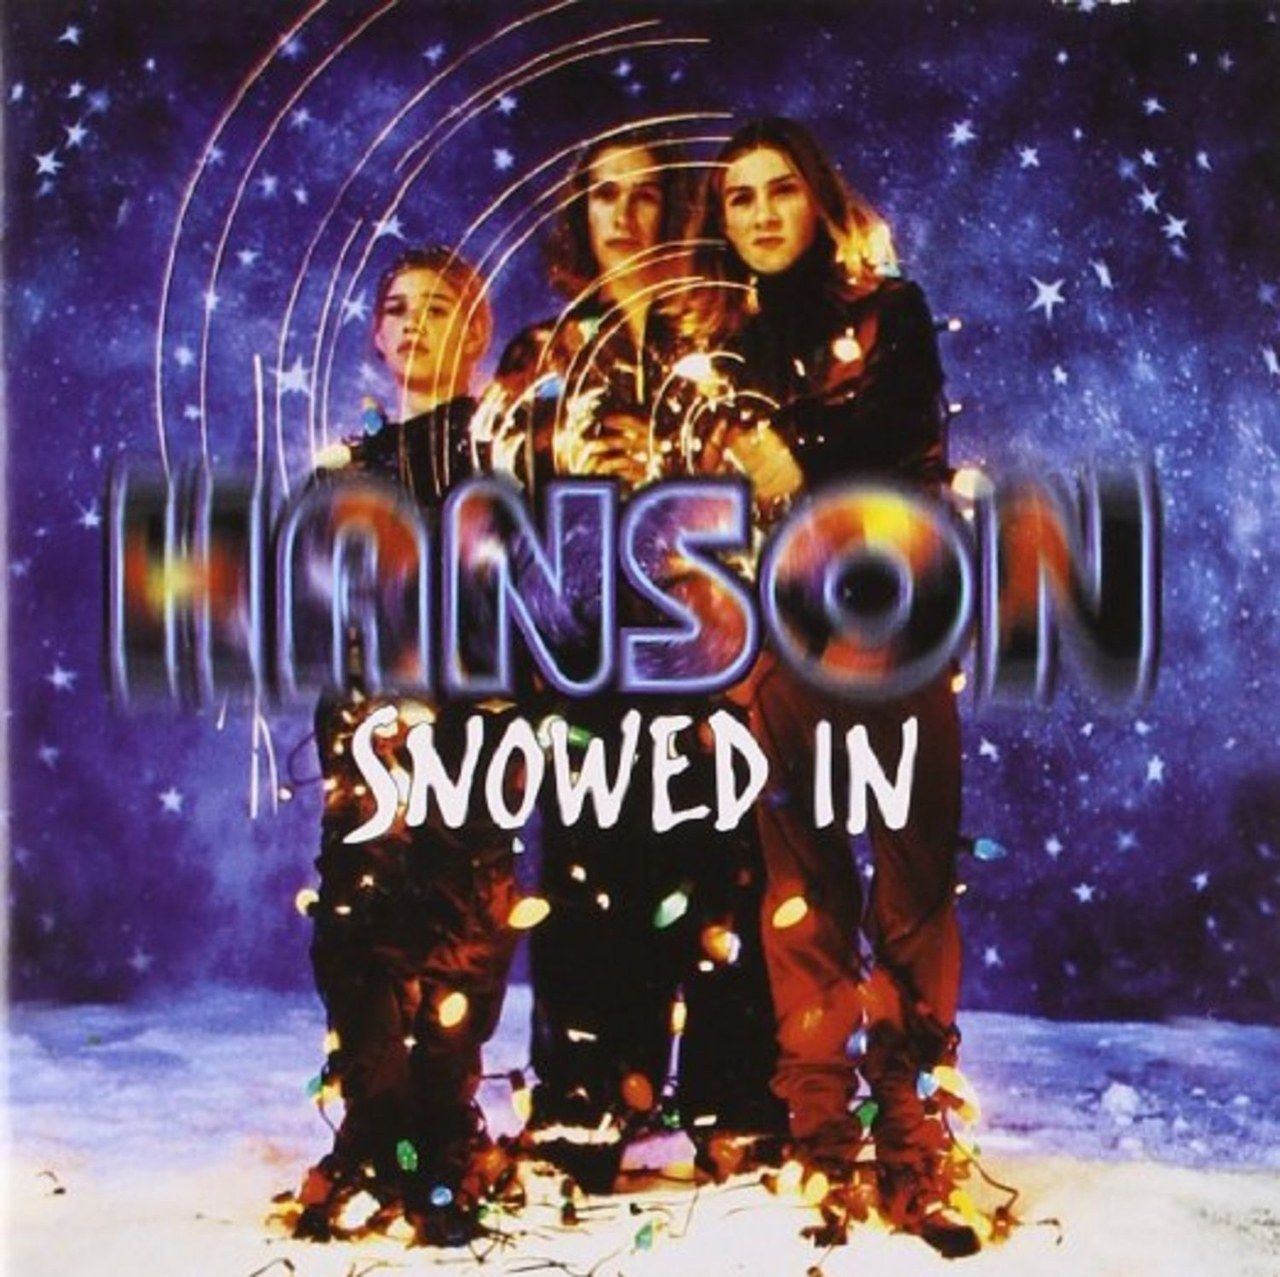 Hanson snowed in